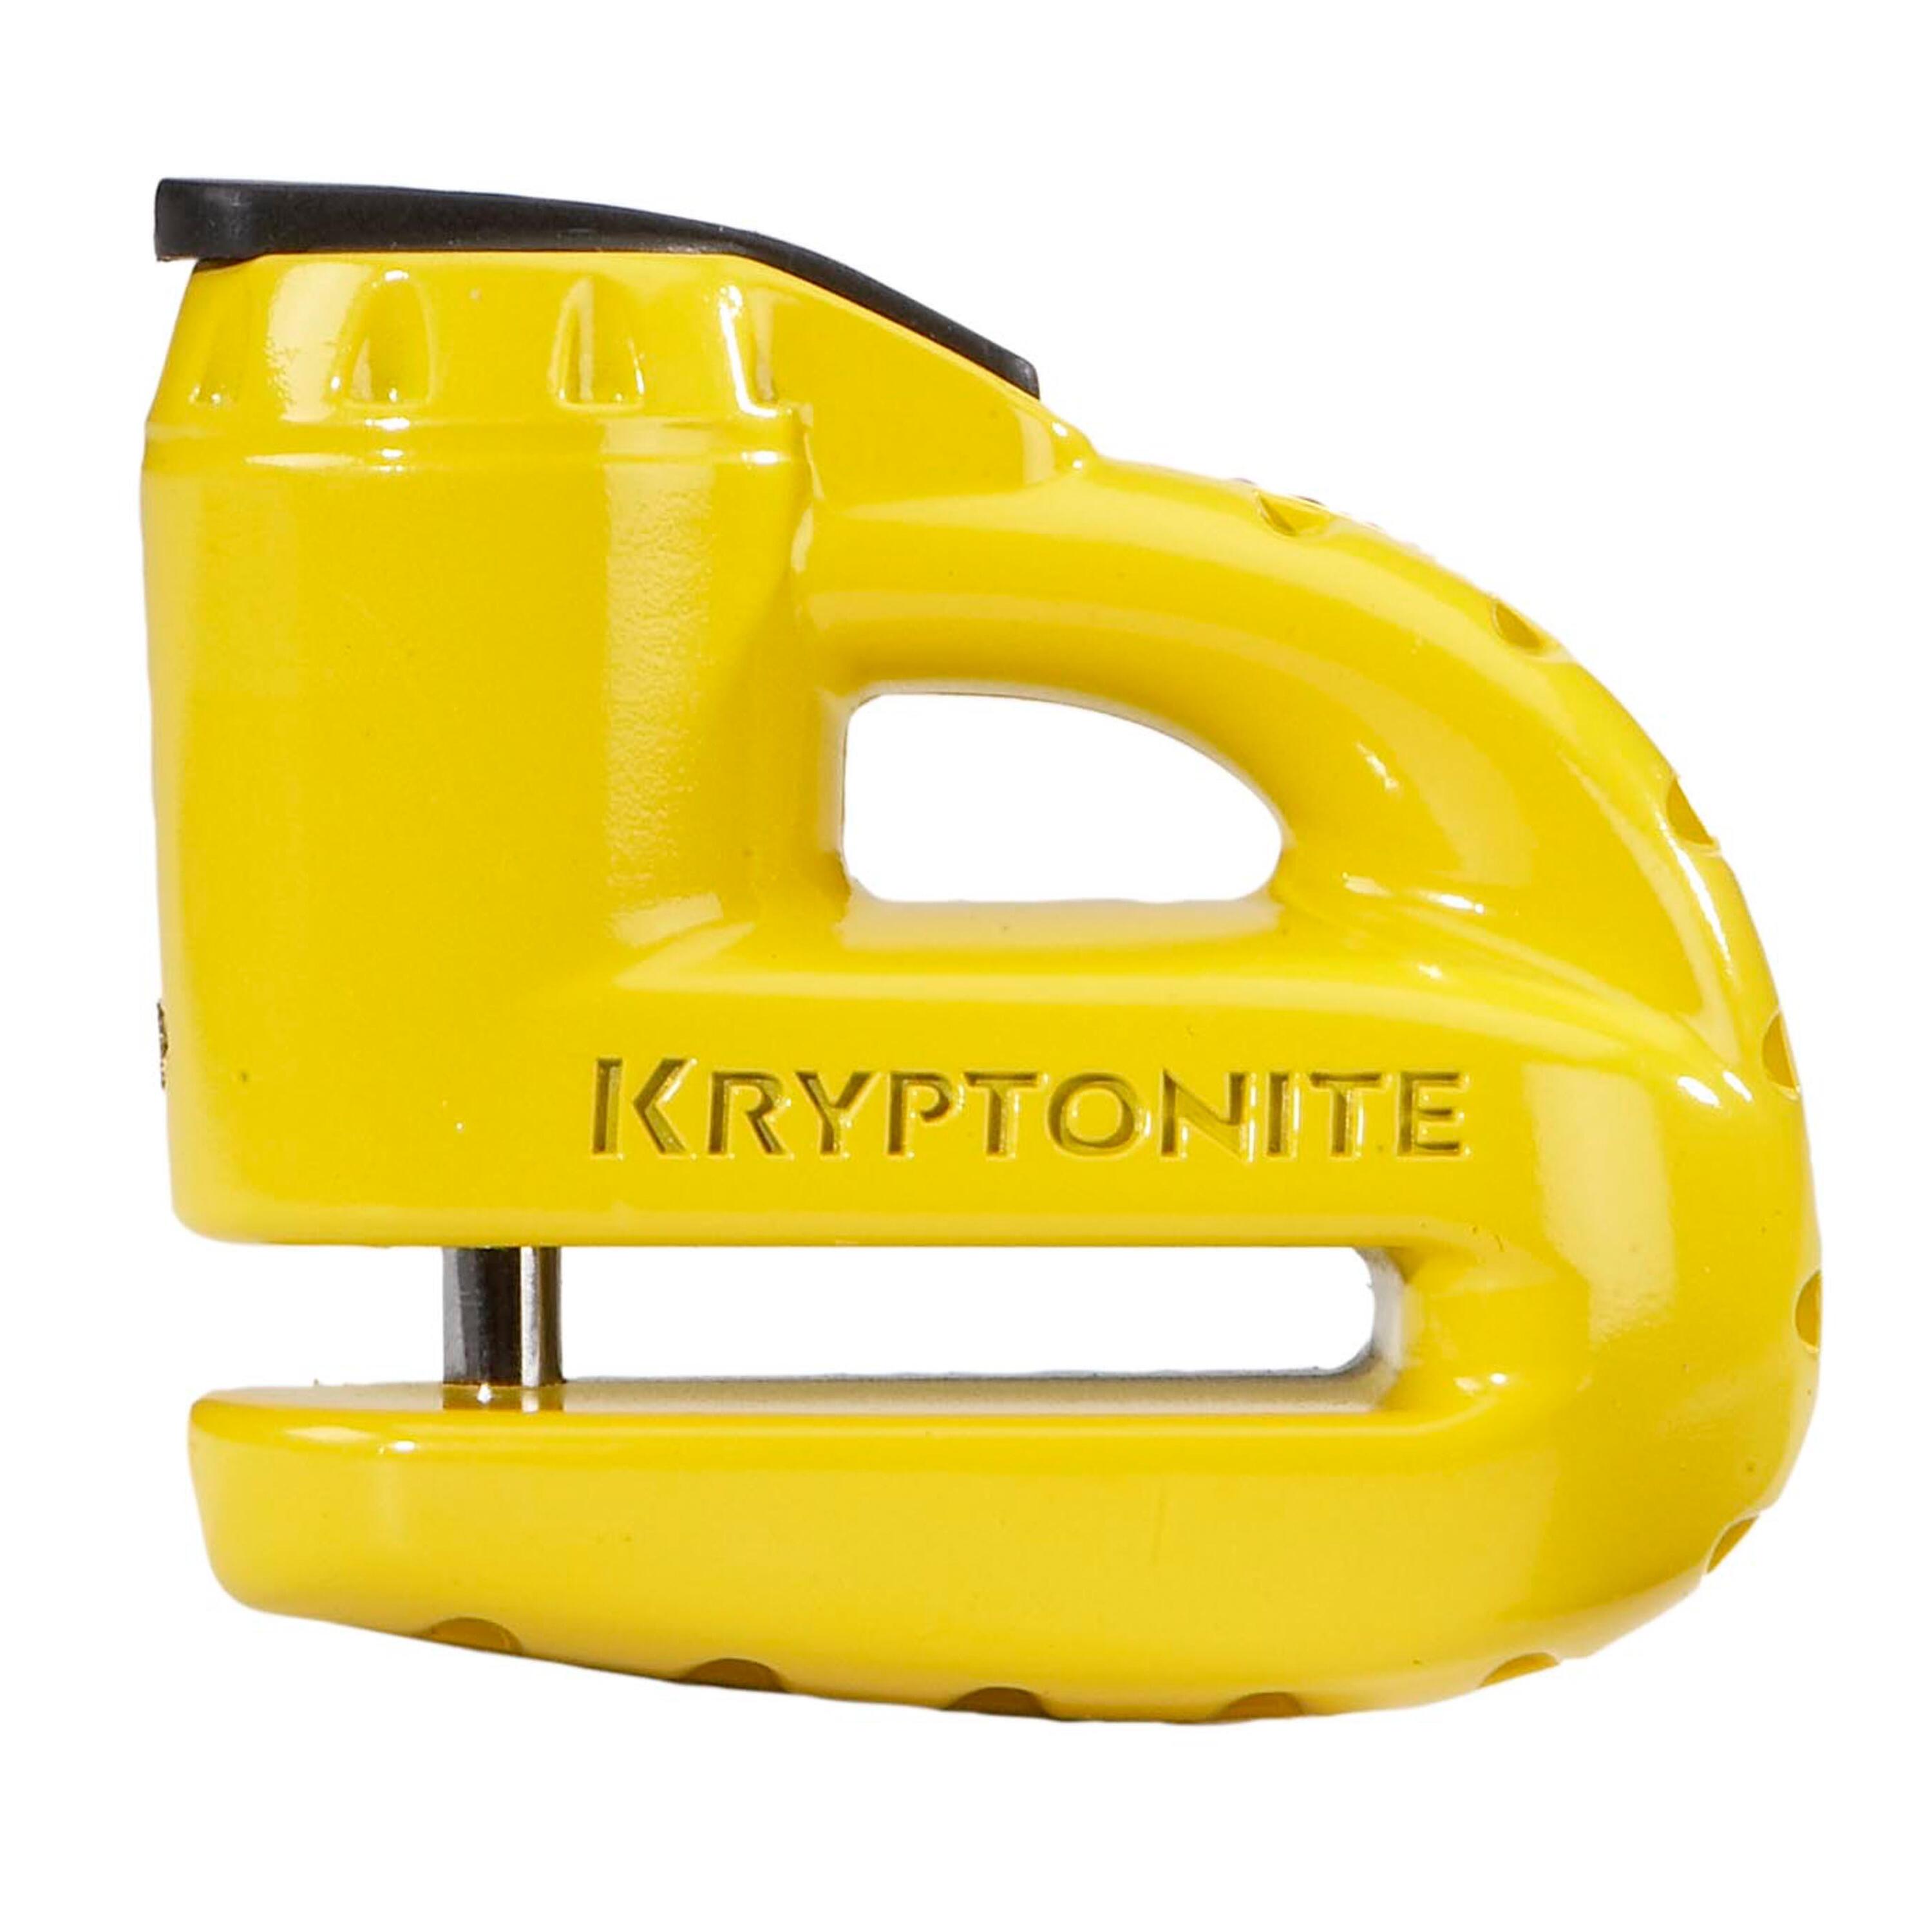 KRYPTONITE Kryptonite Keeper 5-S Disc Lock - with Reminder Cable